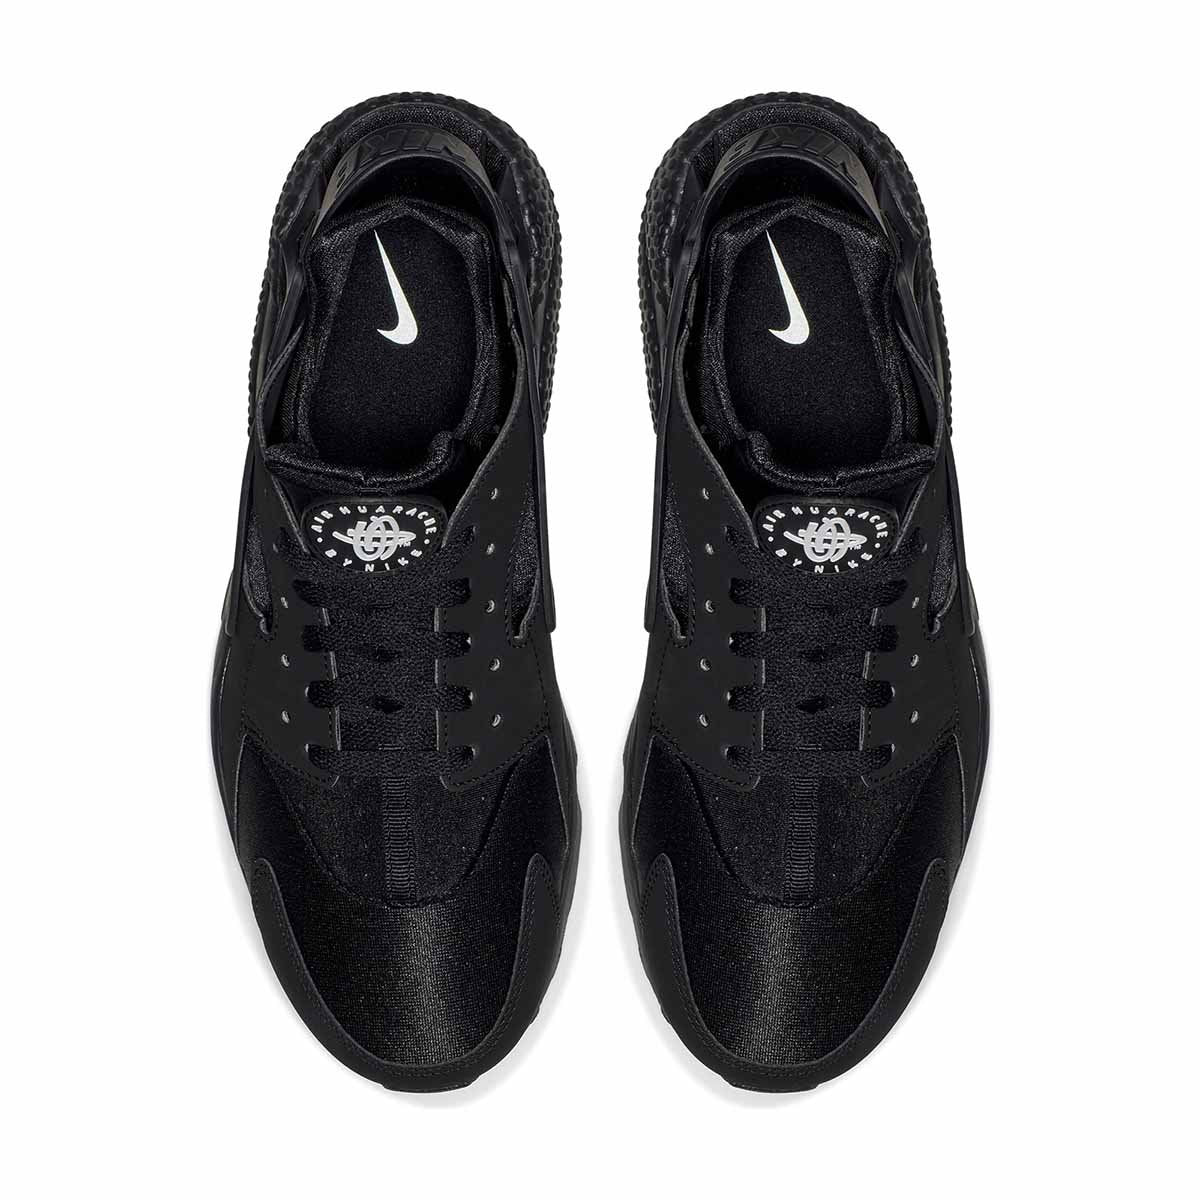 Men's shoes Nike Air Huarache Run Ultra Black/ Black-Black